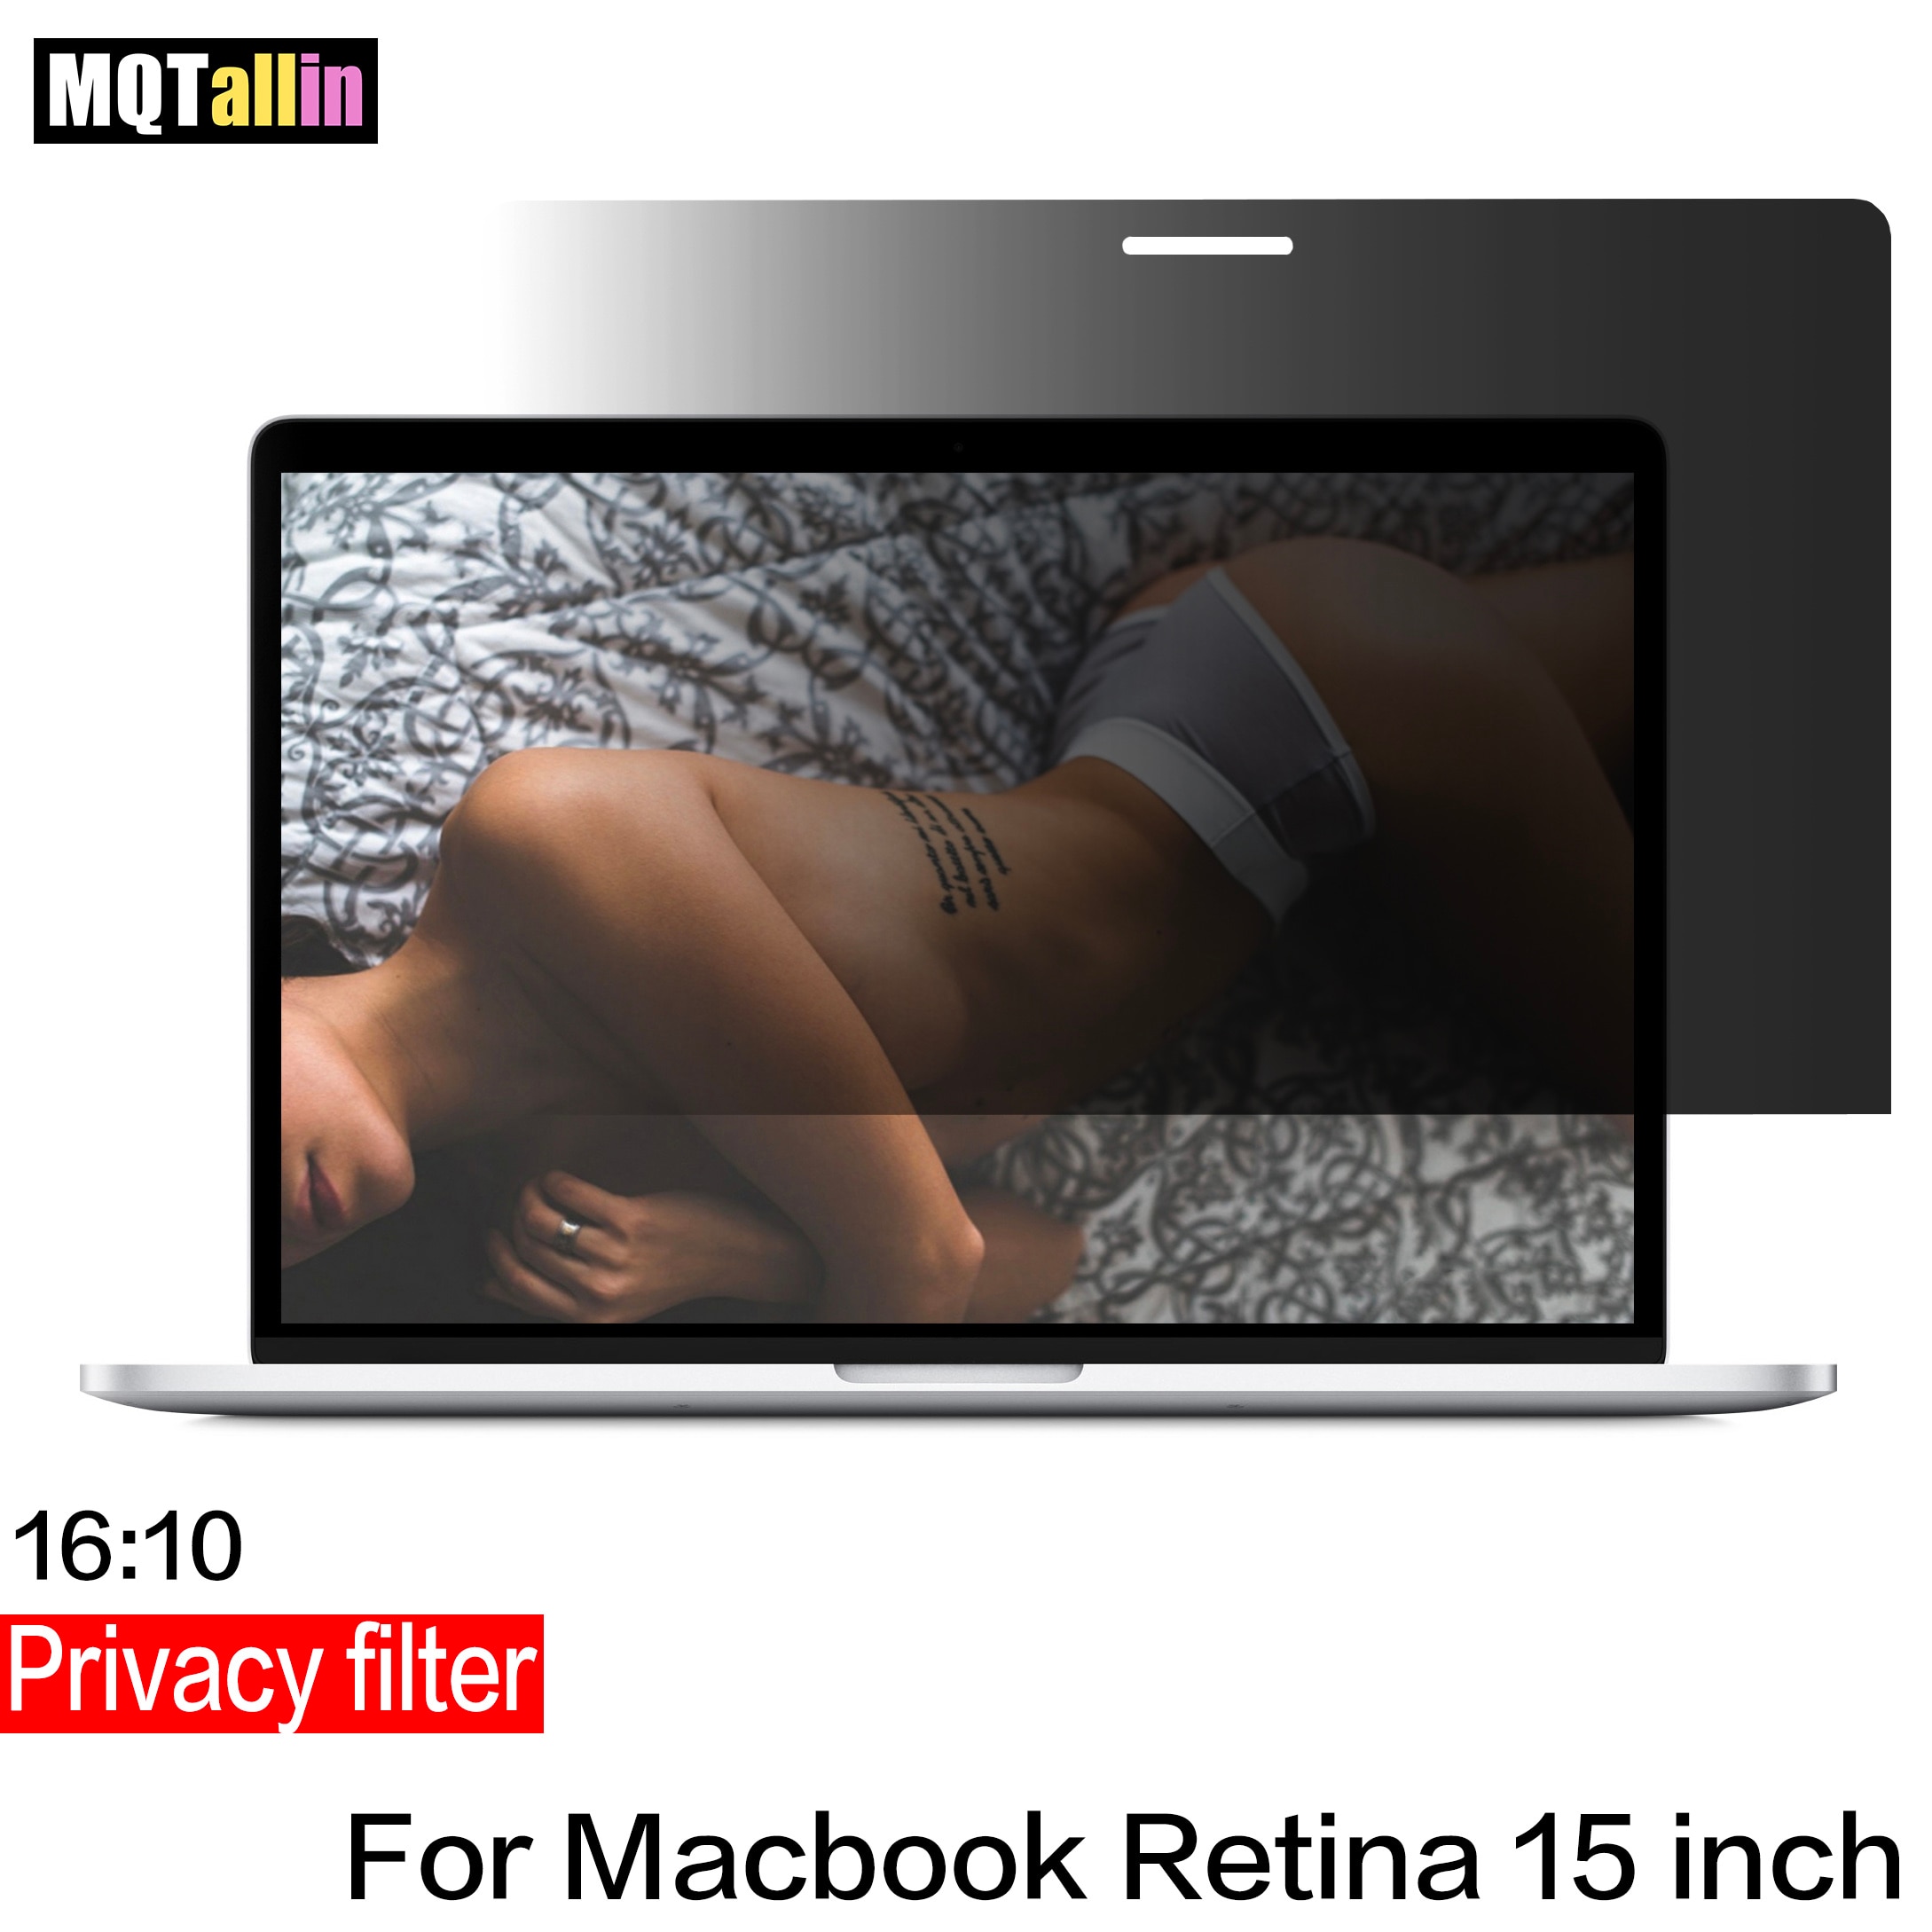 Full screen Privacy Filter Schermen beschermfolie voor MacBook Retina 15 inch laptop Model A1398, size 353mm * 231mm